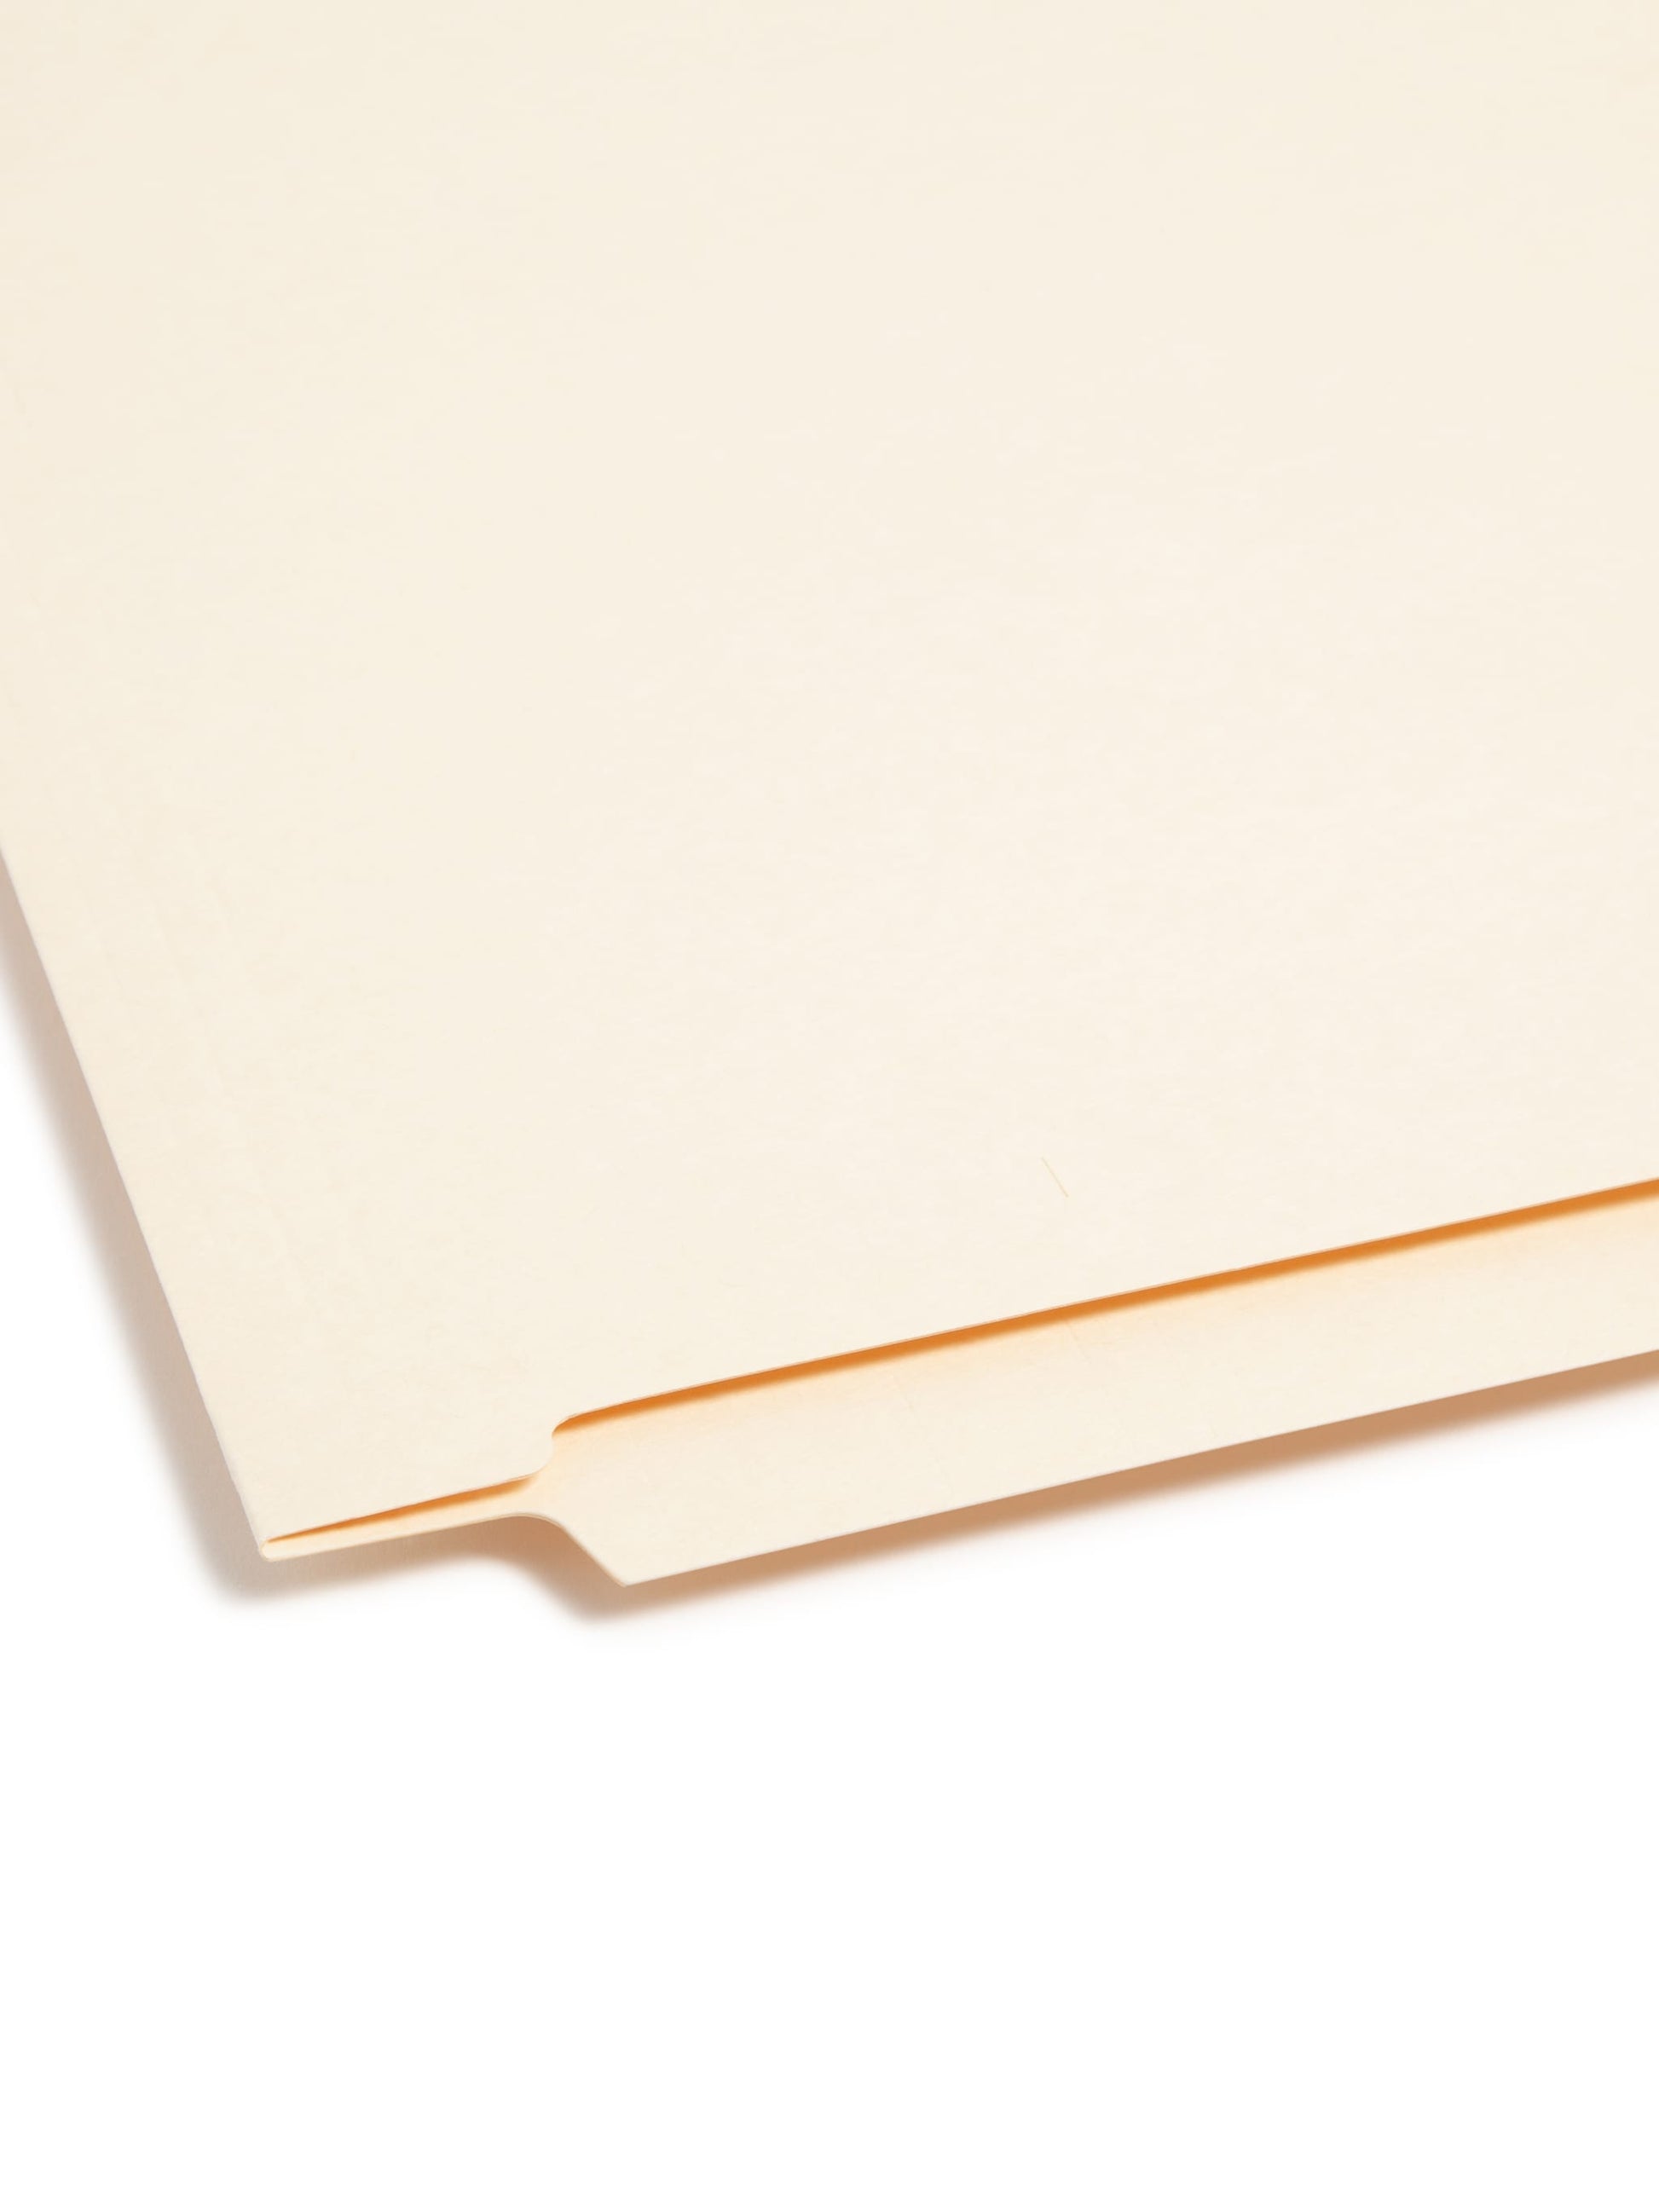 Shelf-Master® Reinforced End Tab Fastener File Folders, Straight-Cut Tab, 2 Fasteners, Manila Color, Letter Size, Set of 50, 086486341158